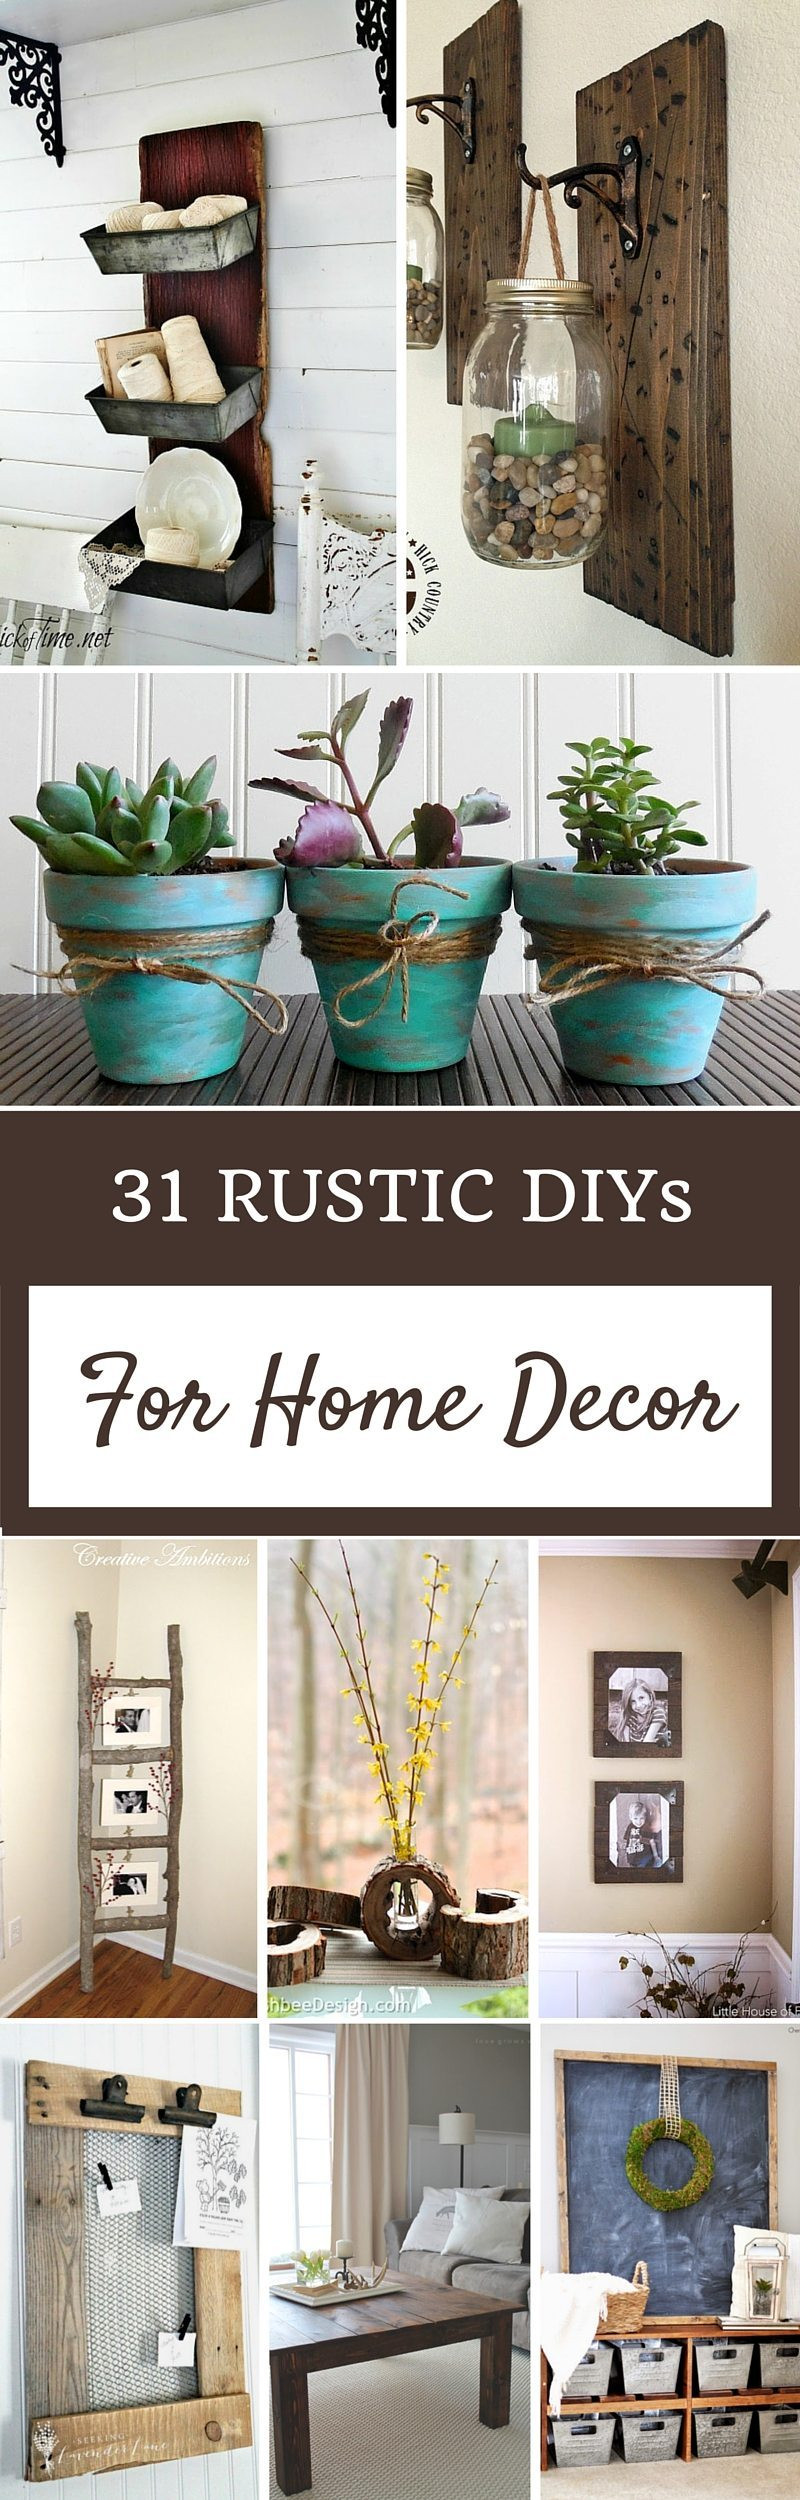 Pinterest DIY Decorating Ideas
 Rustic Home Decor Ideas